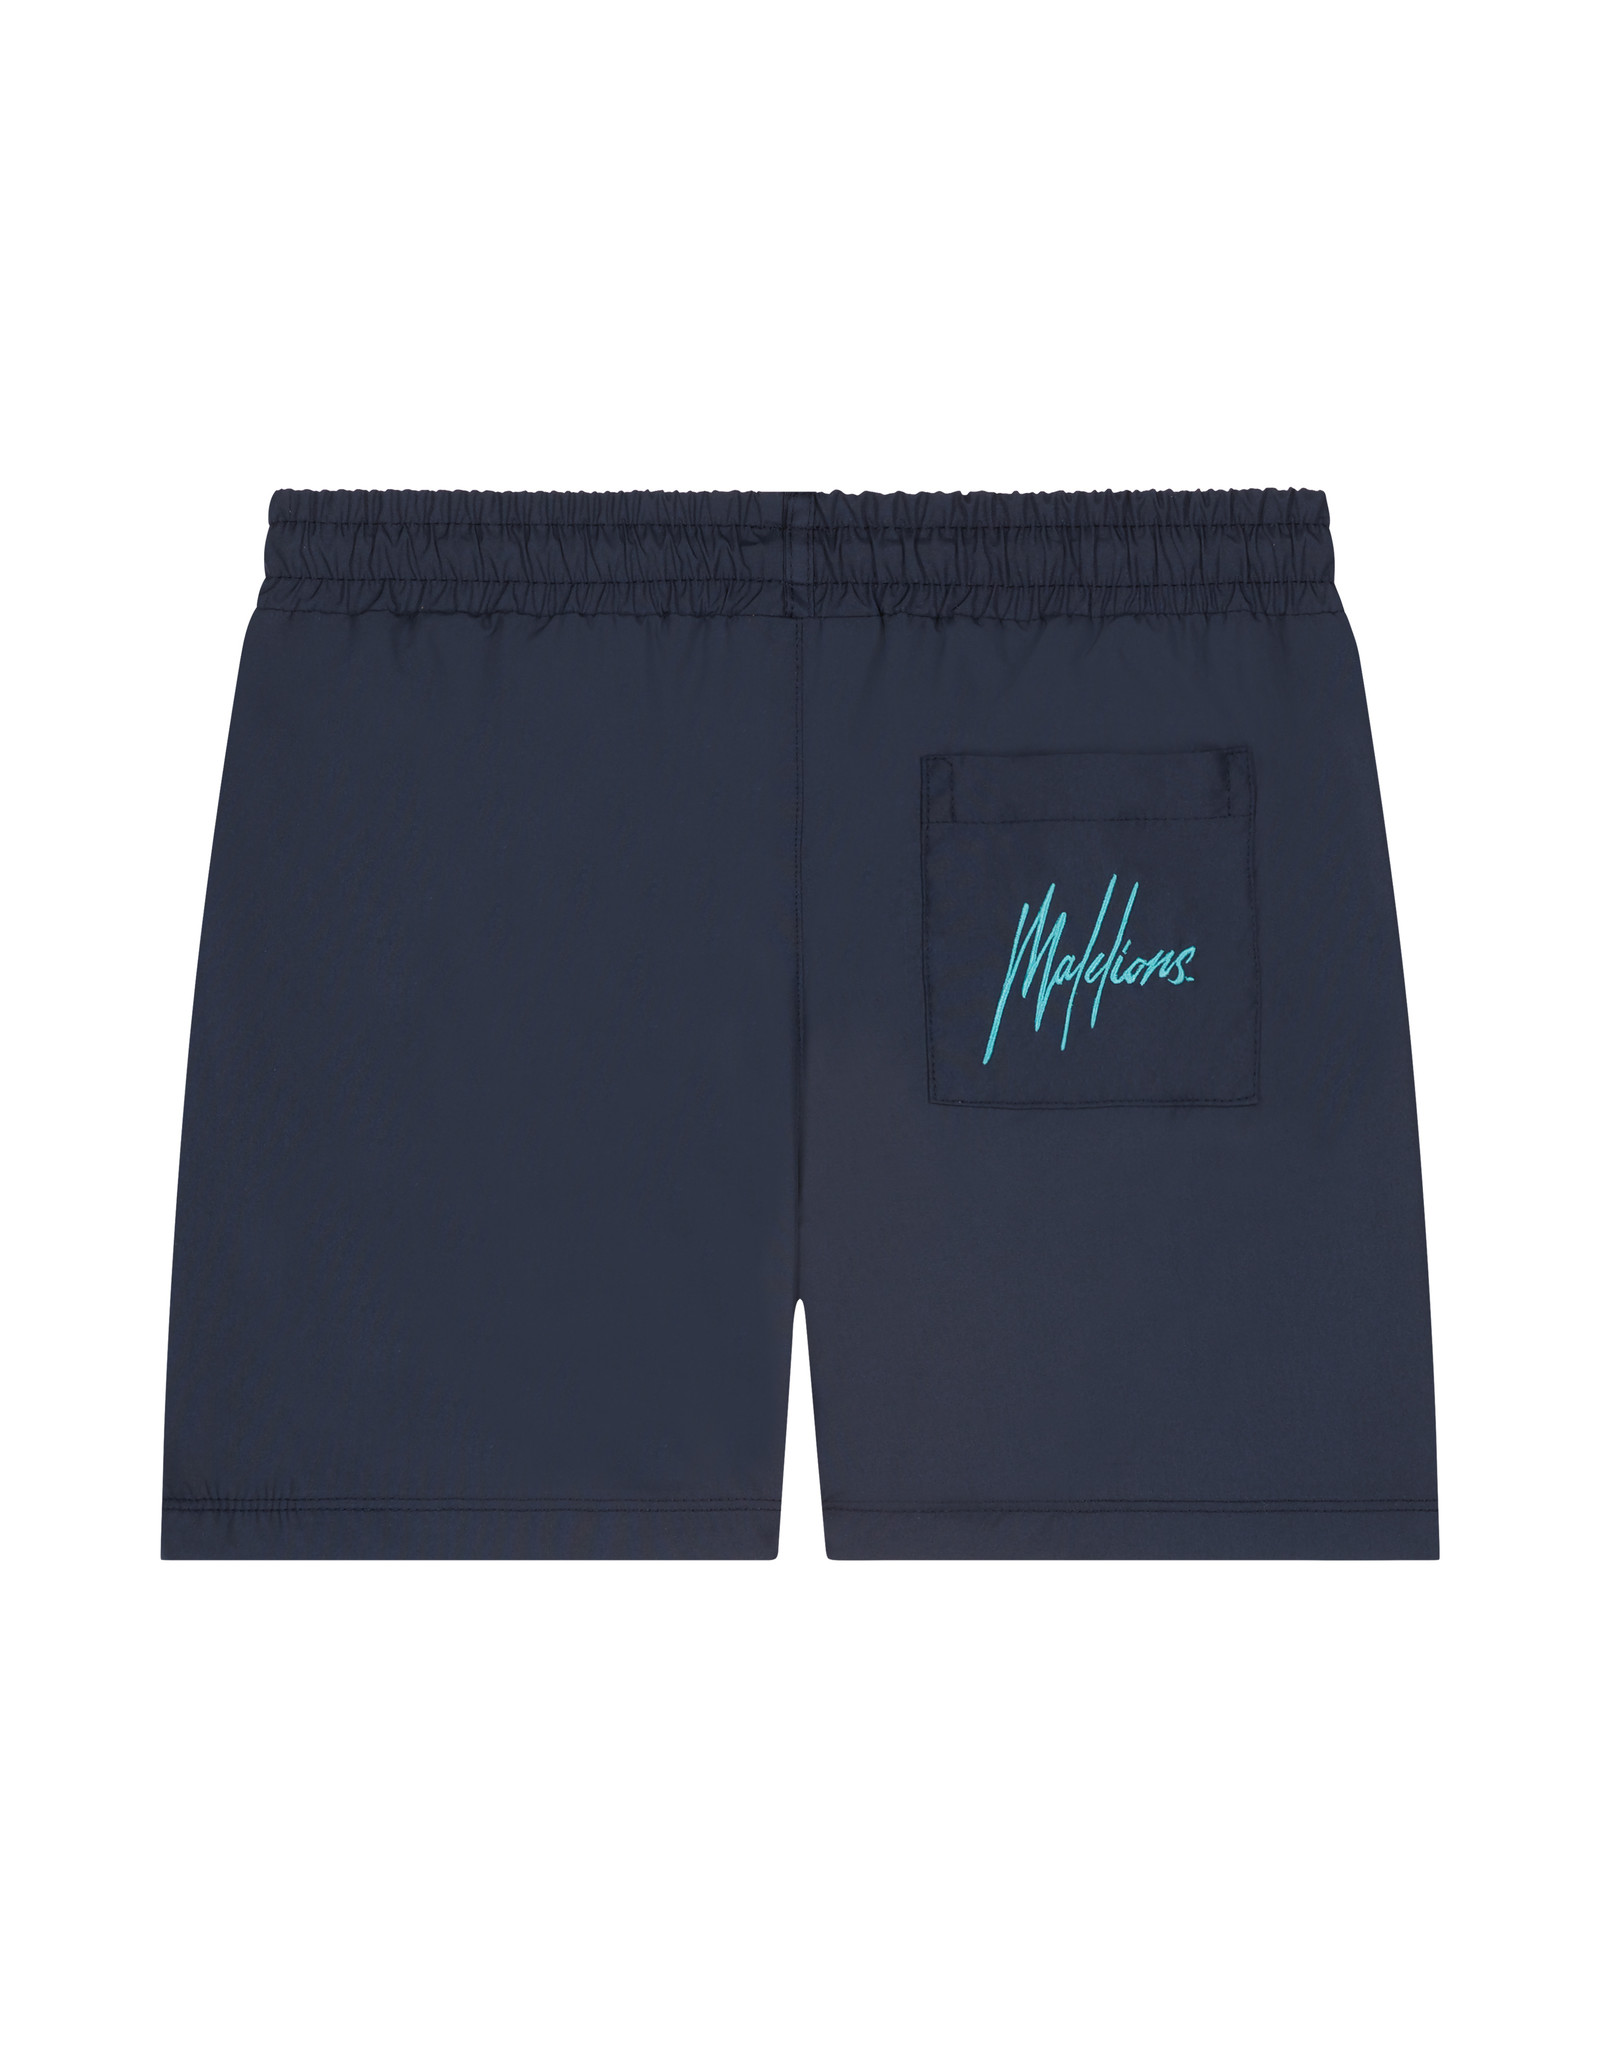 Malelions Junior Francisco Swimshort Navy/Turquoise